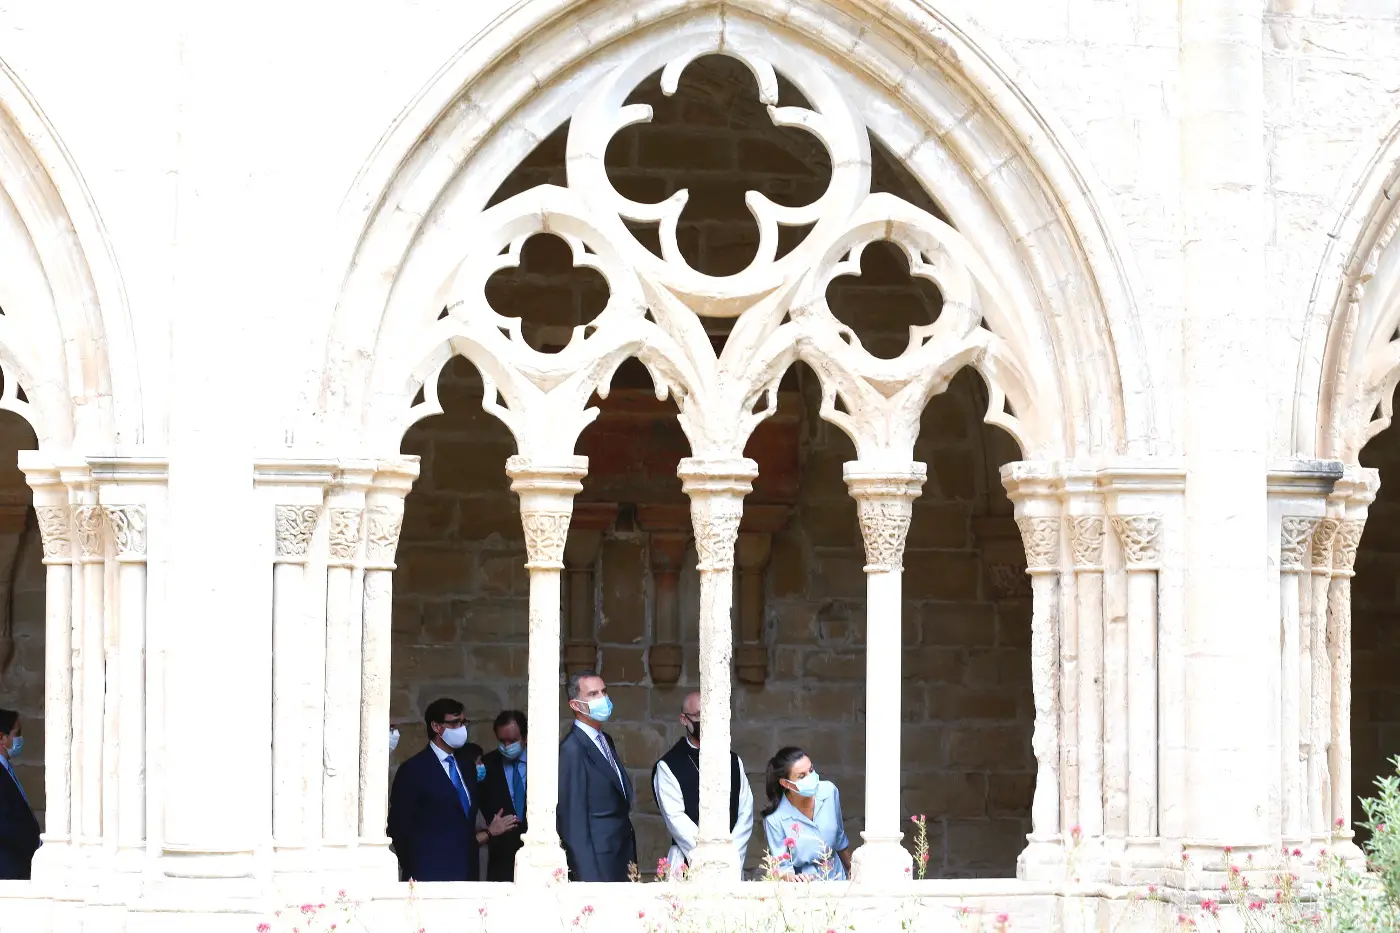 King Felipe and Queen letizia toured a monastery in Catalonia